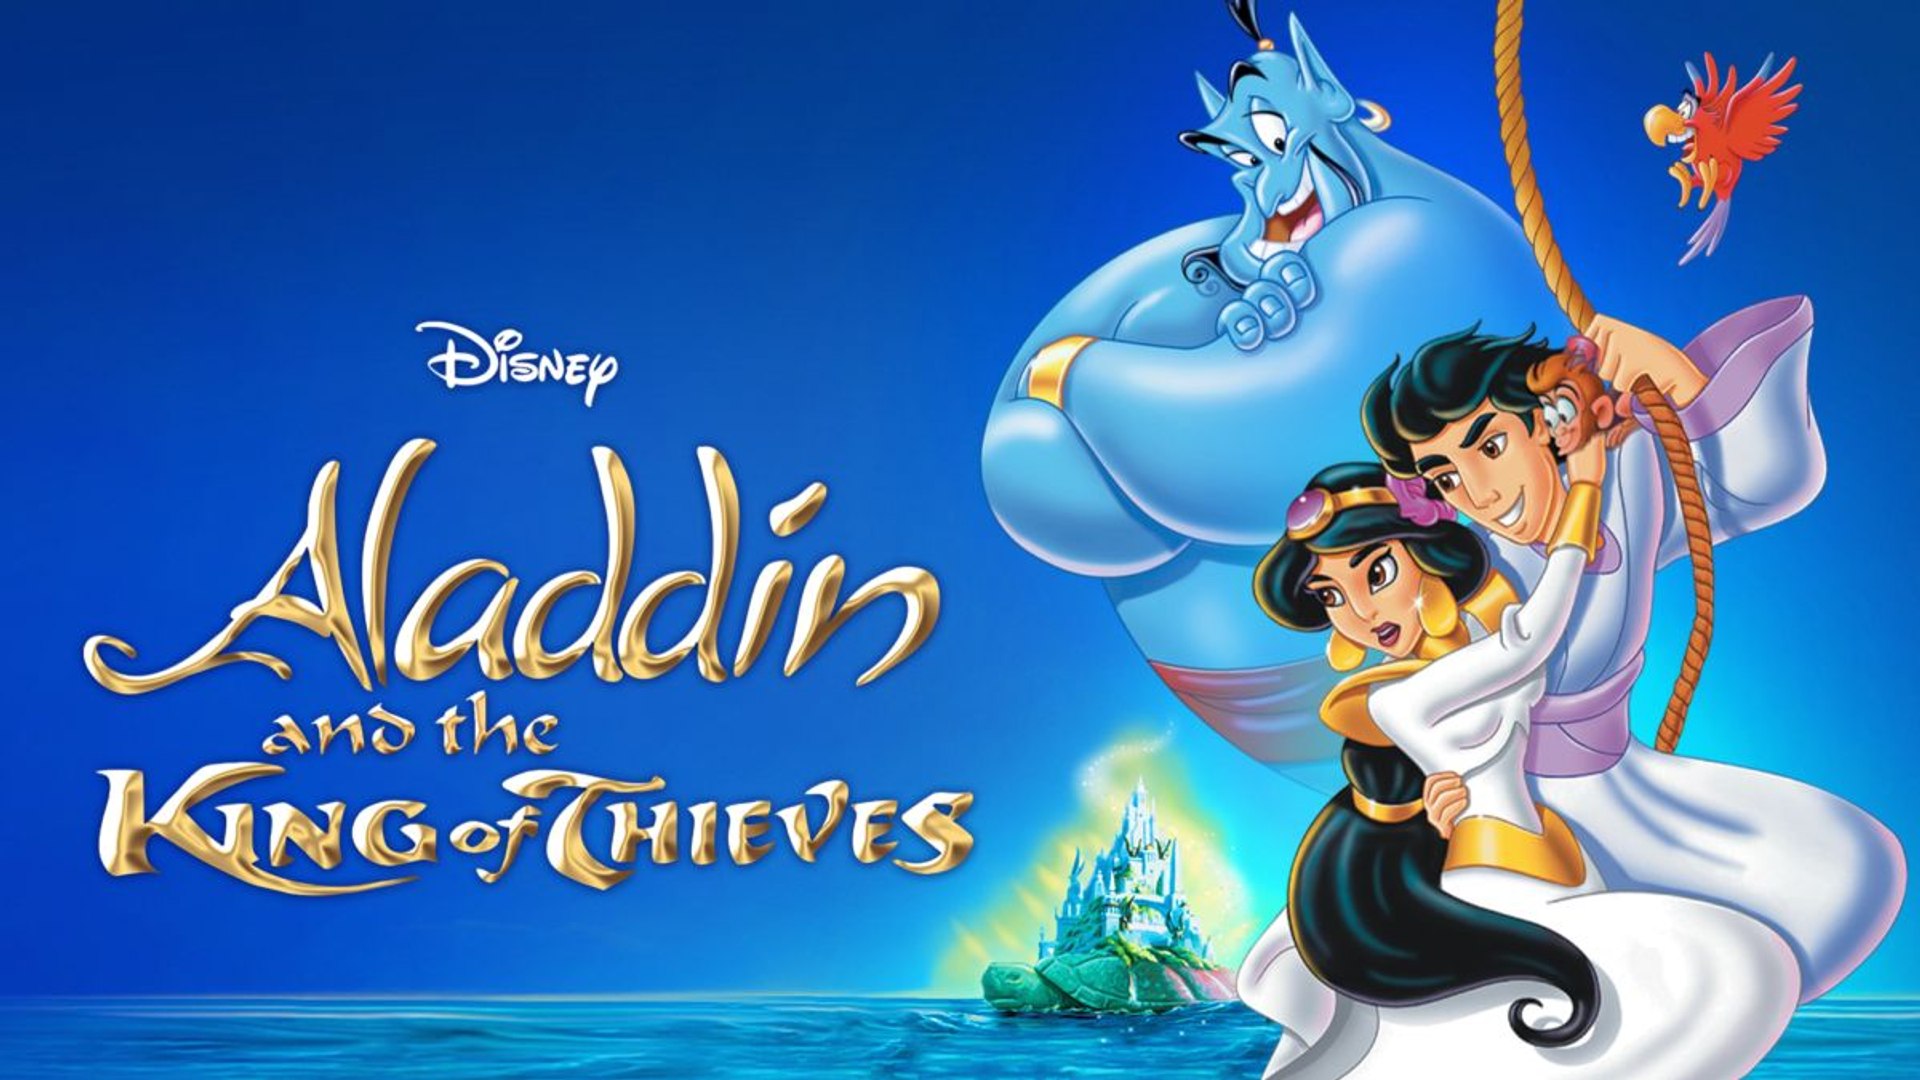 Aladdin: Jafar animation on Vimeo